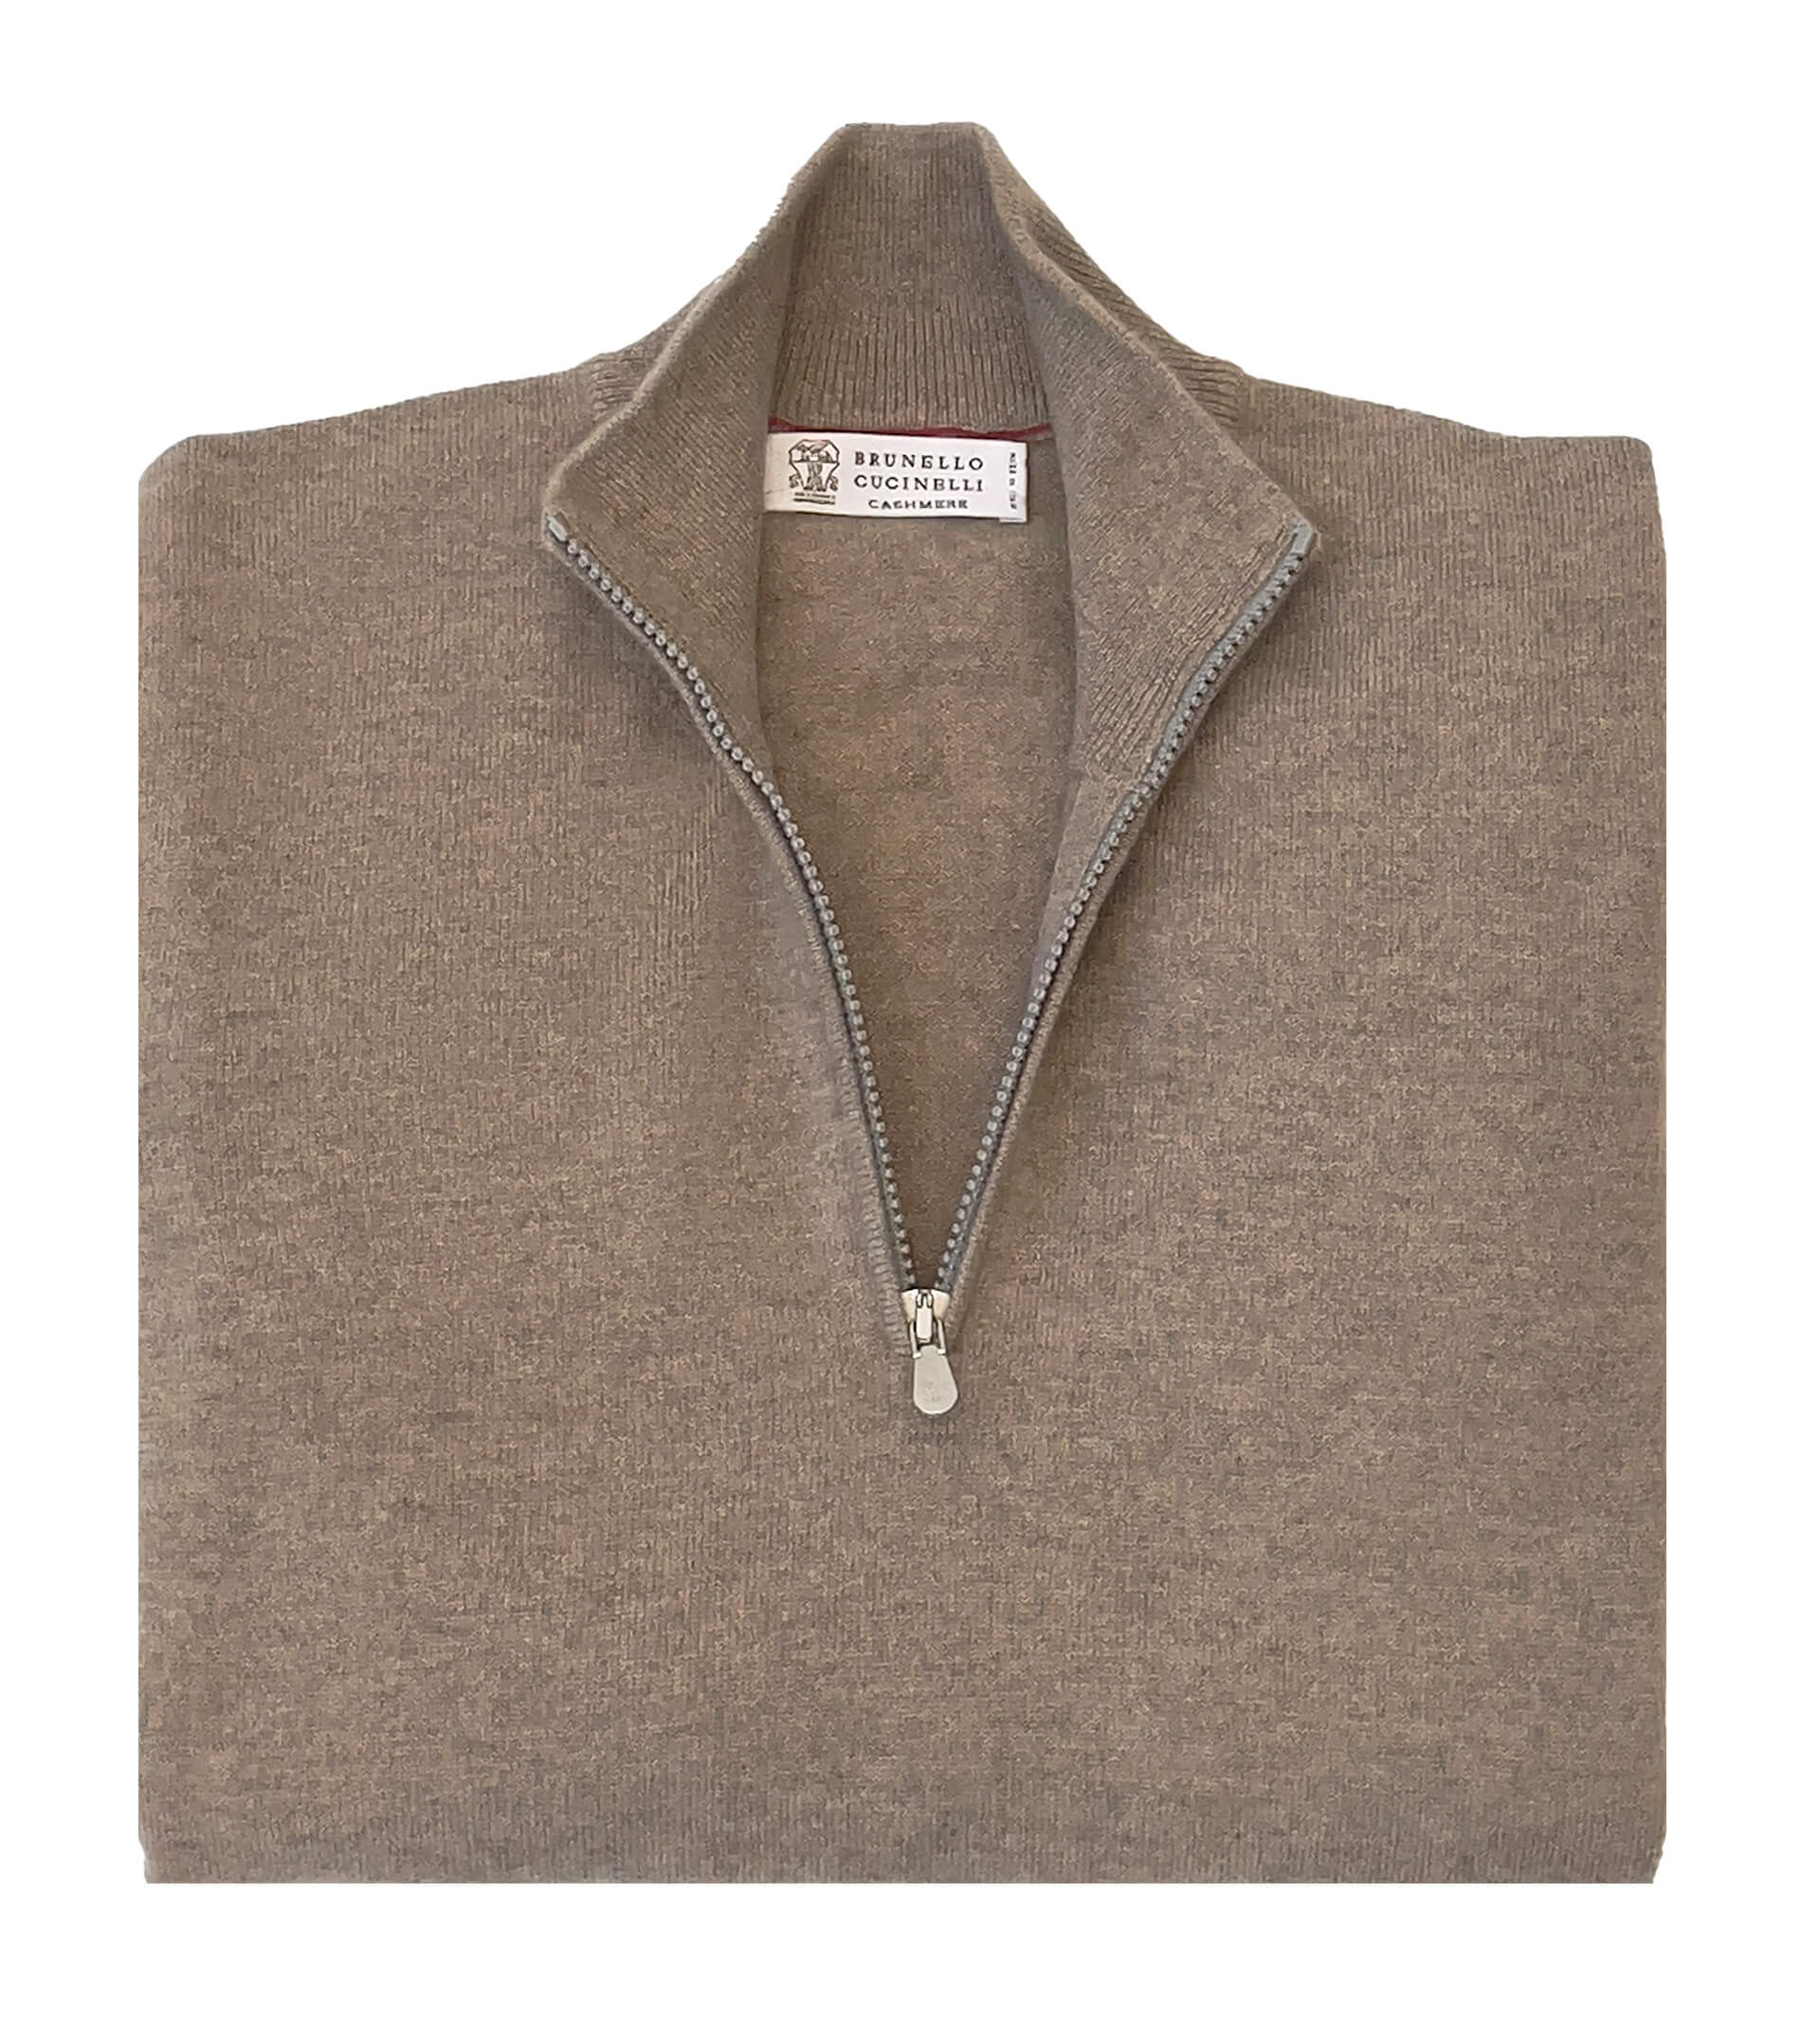 BRUNELLO CUCINELLI 100% Cashmere 1/4 Zip Sweater